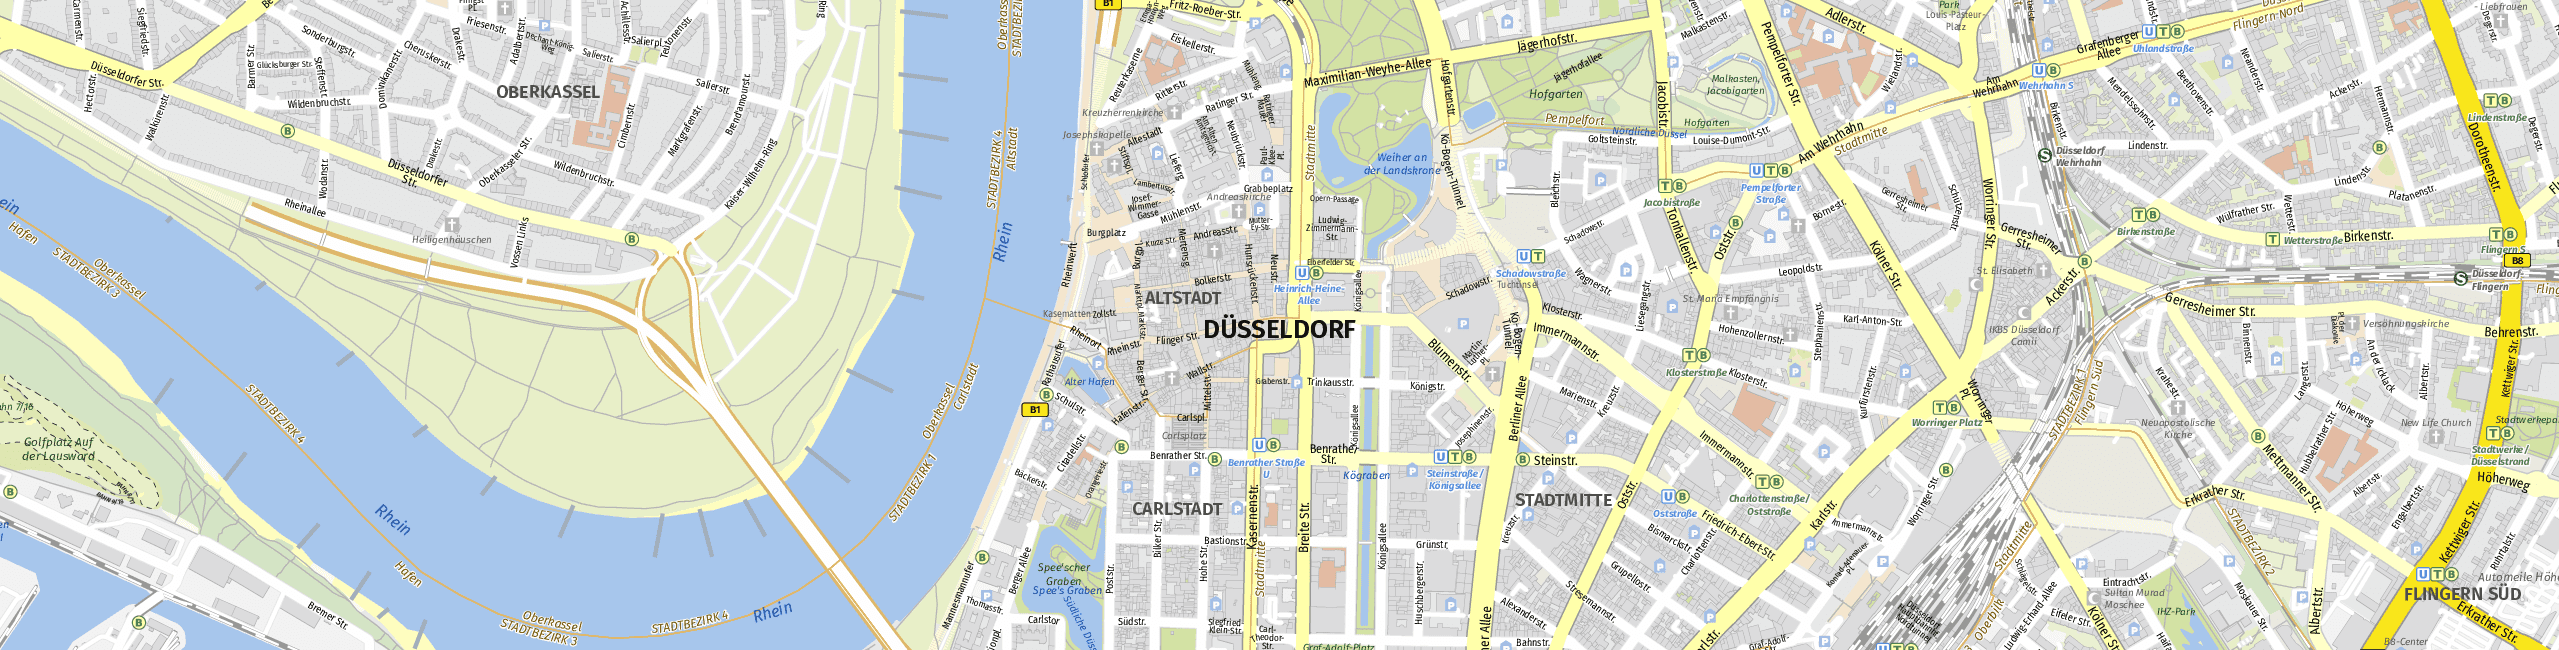 Stadtplan Düsseldorf zum Downloaden.